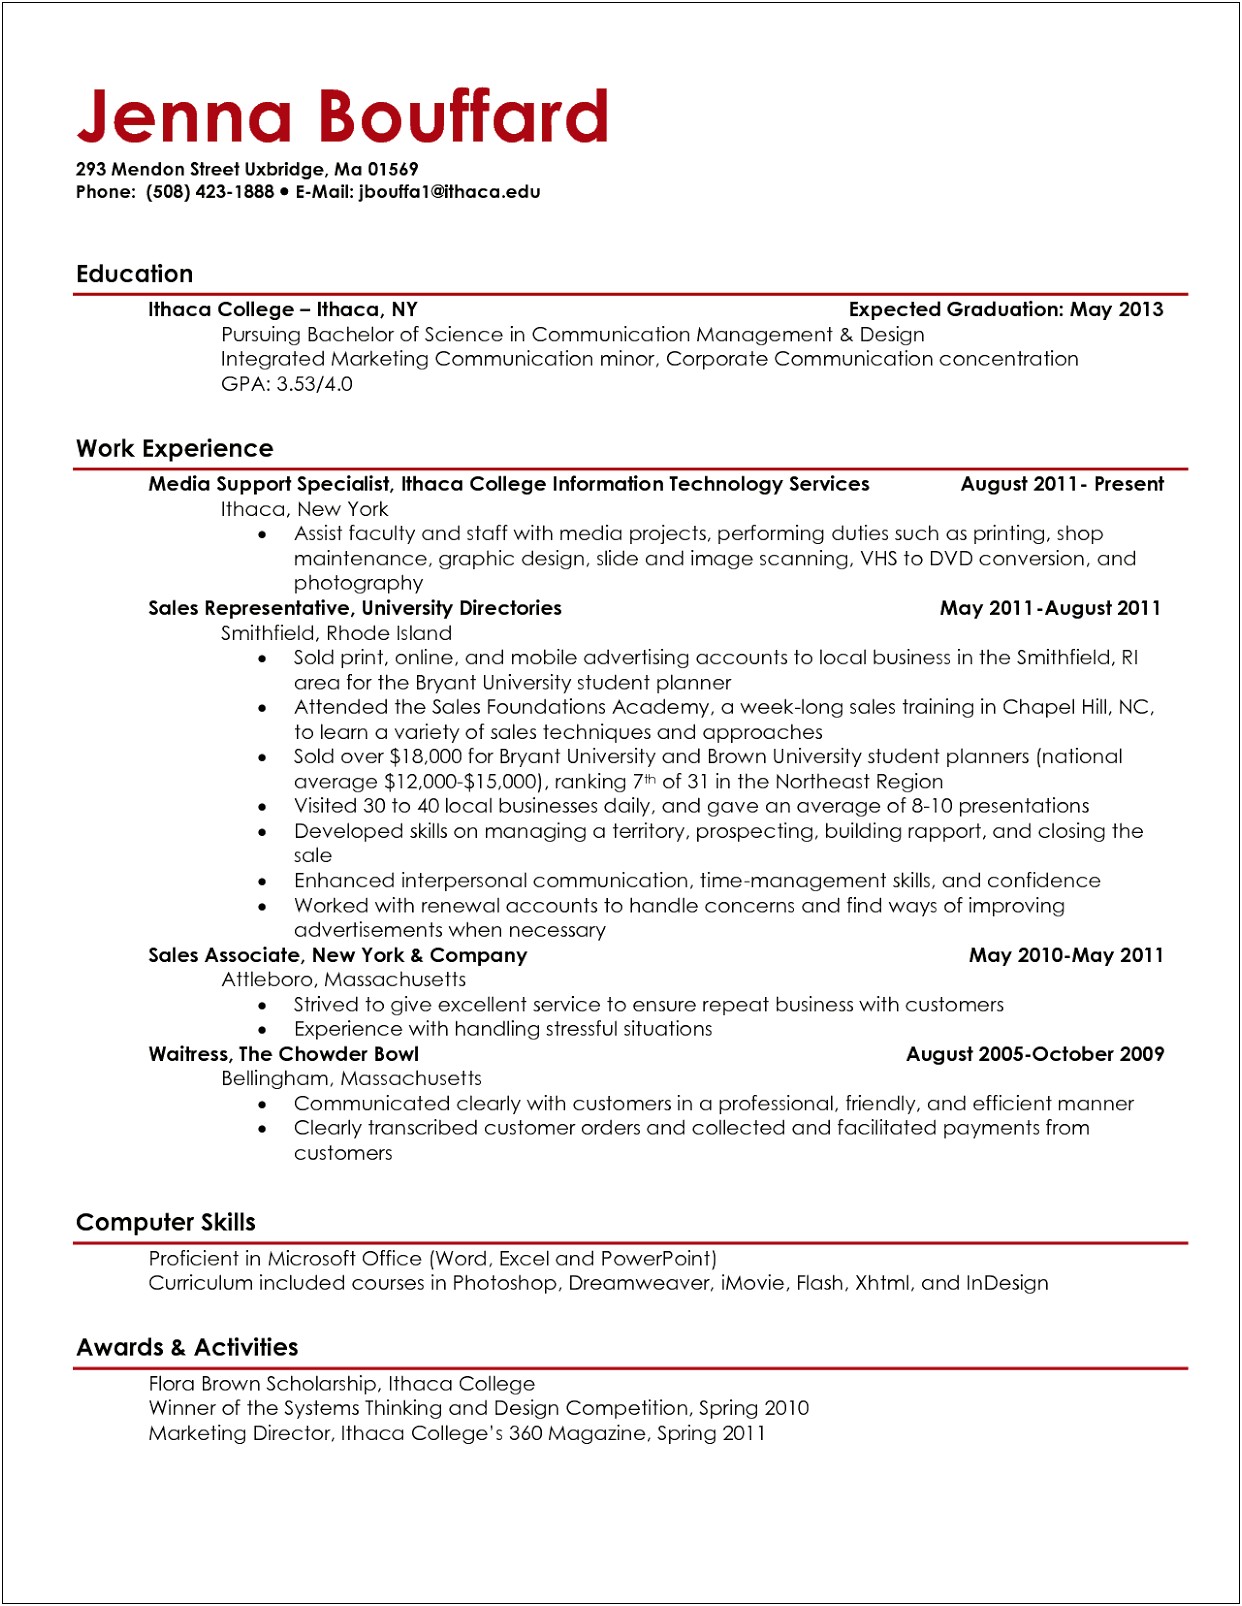 Resume Should I Put Community College